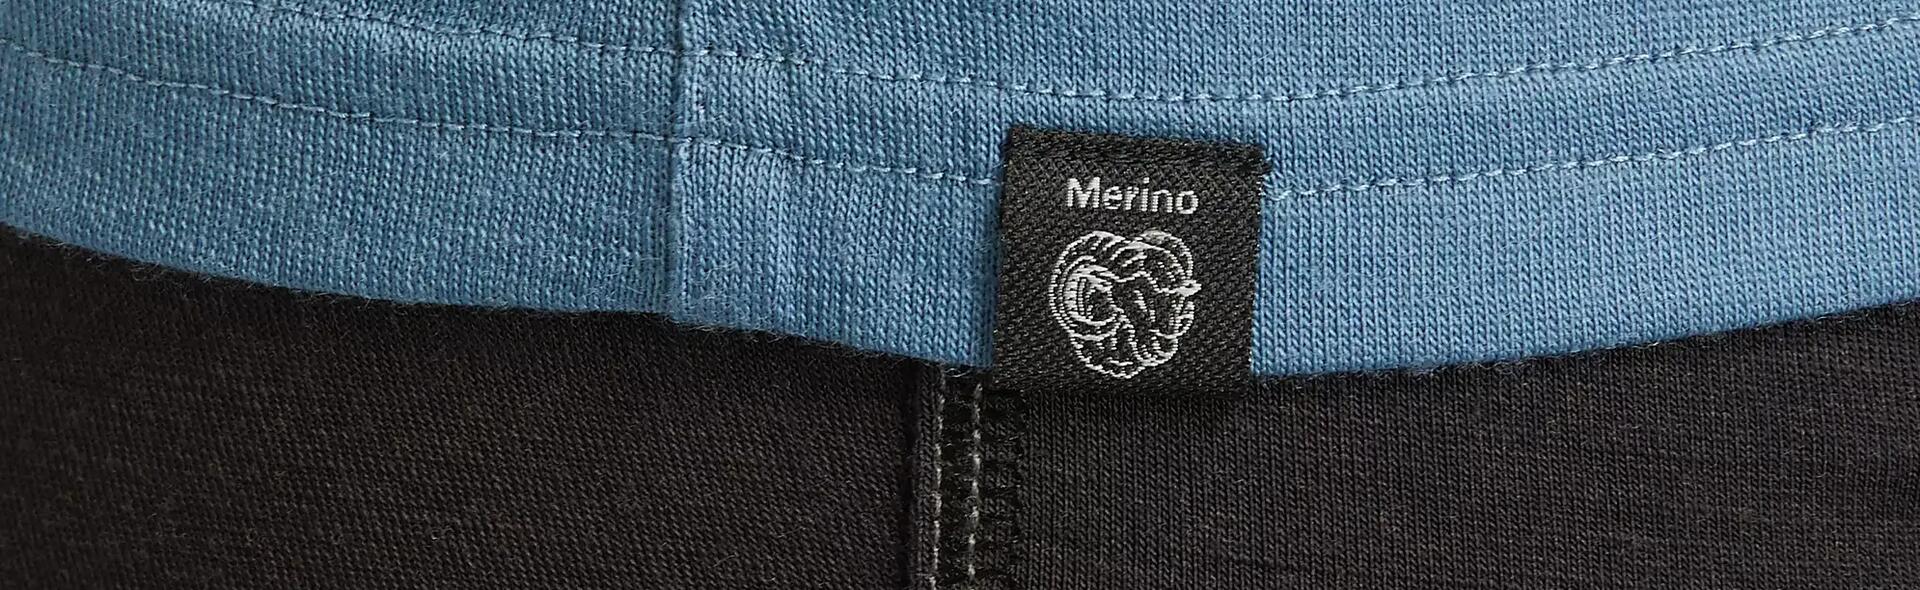 How to maintain a merino wool garment